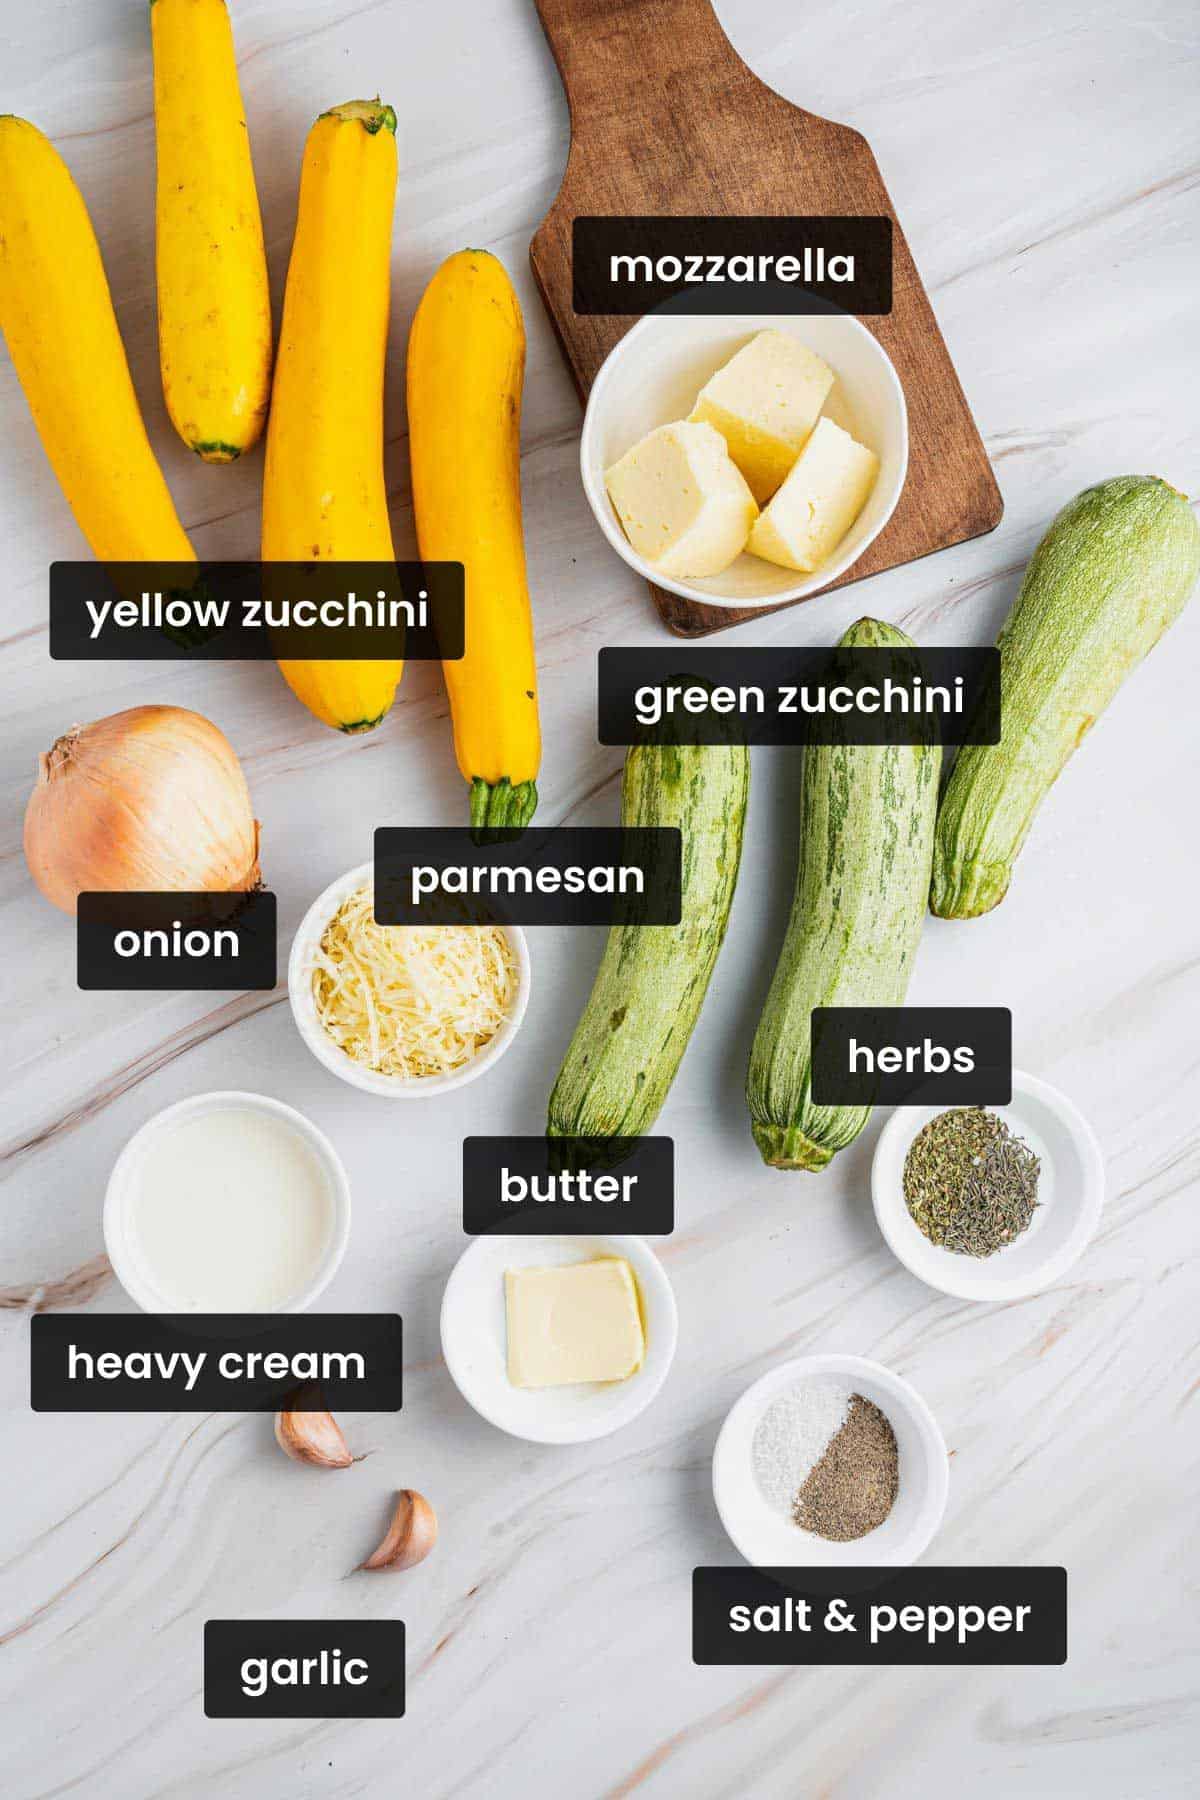 zucchini casserole recipe ingredients.